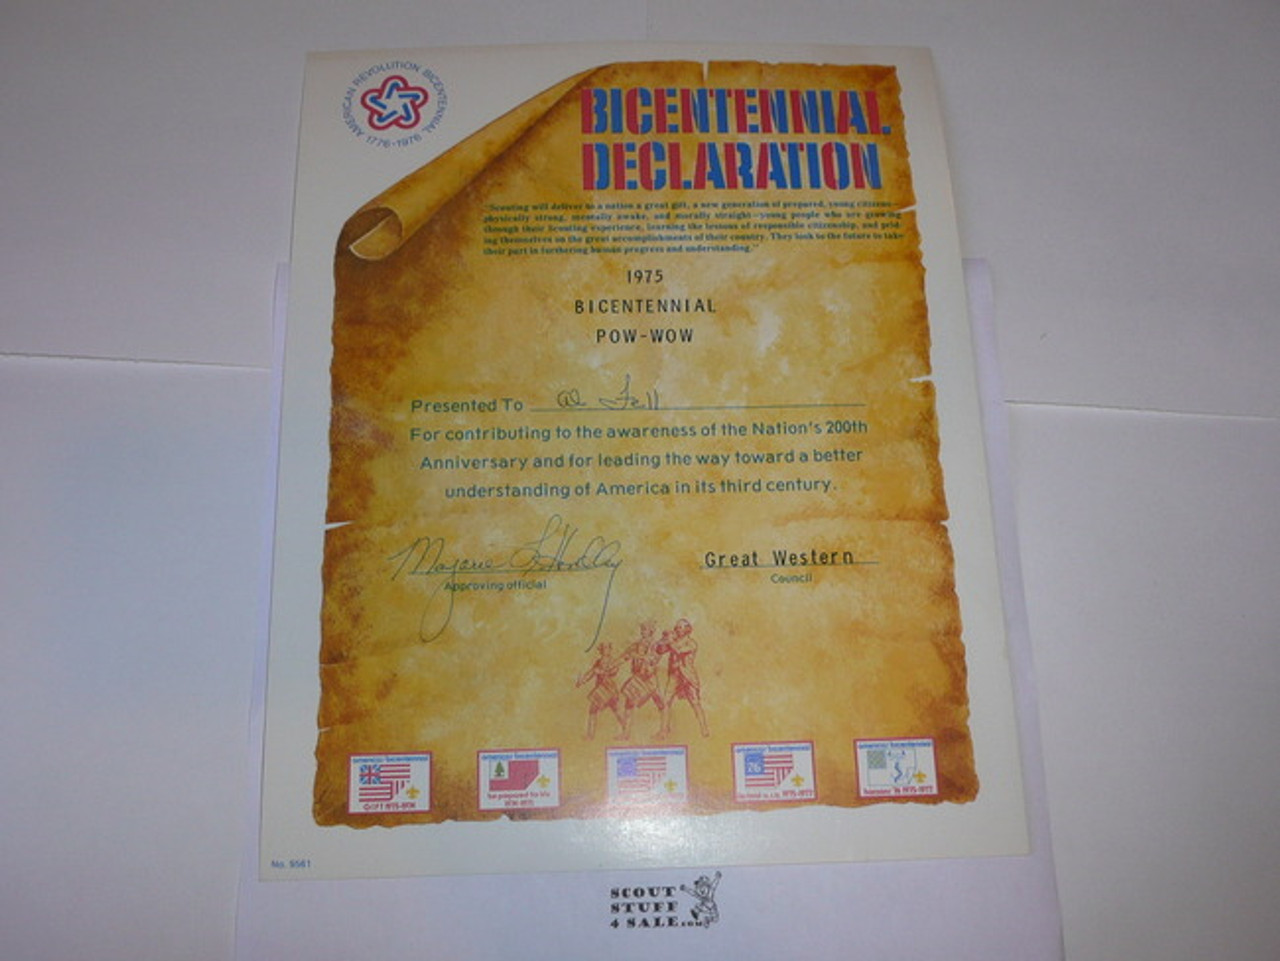 1976 Bicentennial Declaration Certificate of Appreciation, presented